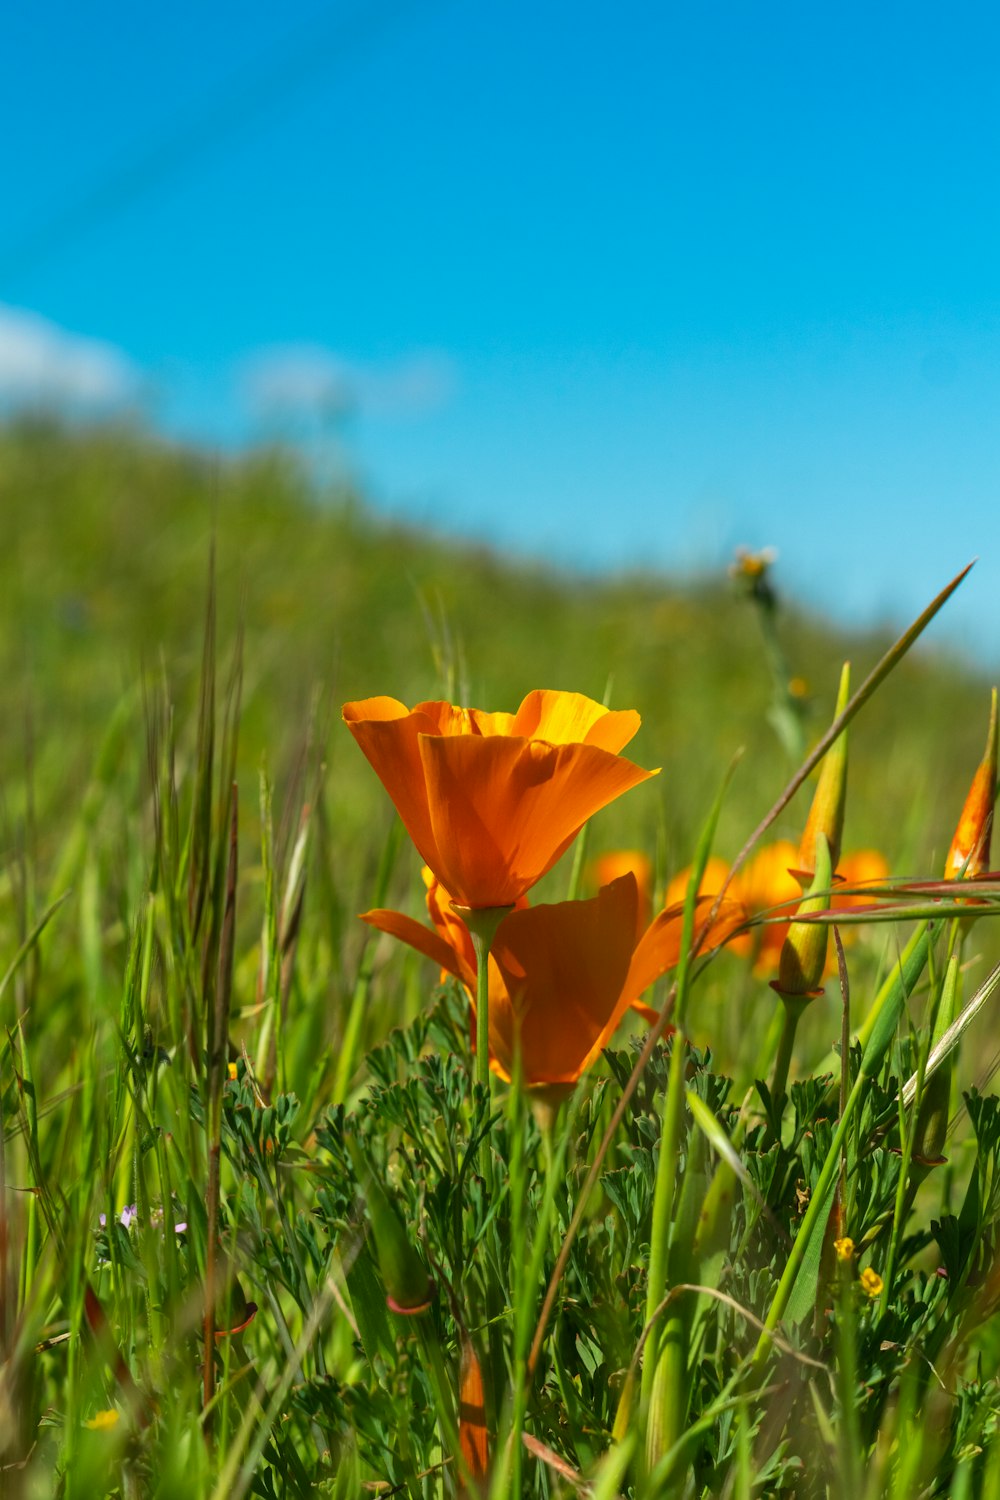 some orange flowers in a grassy field